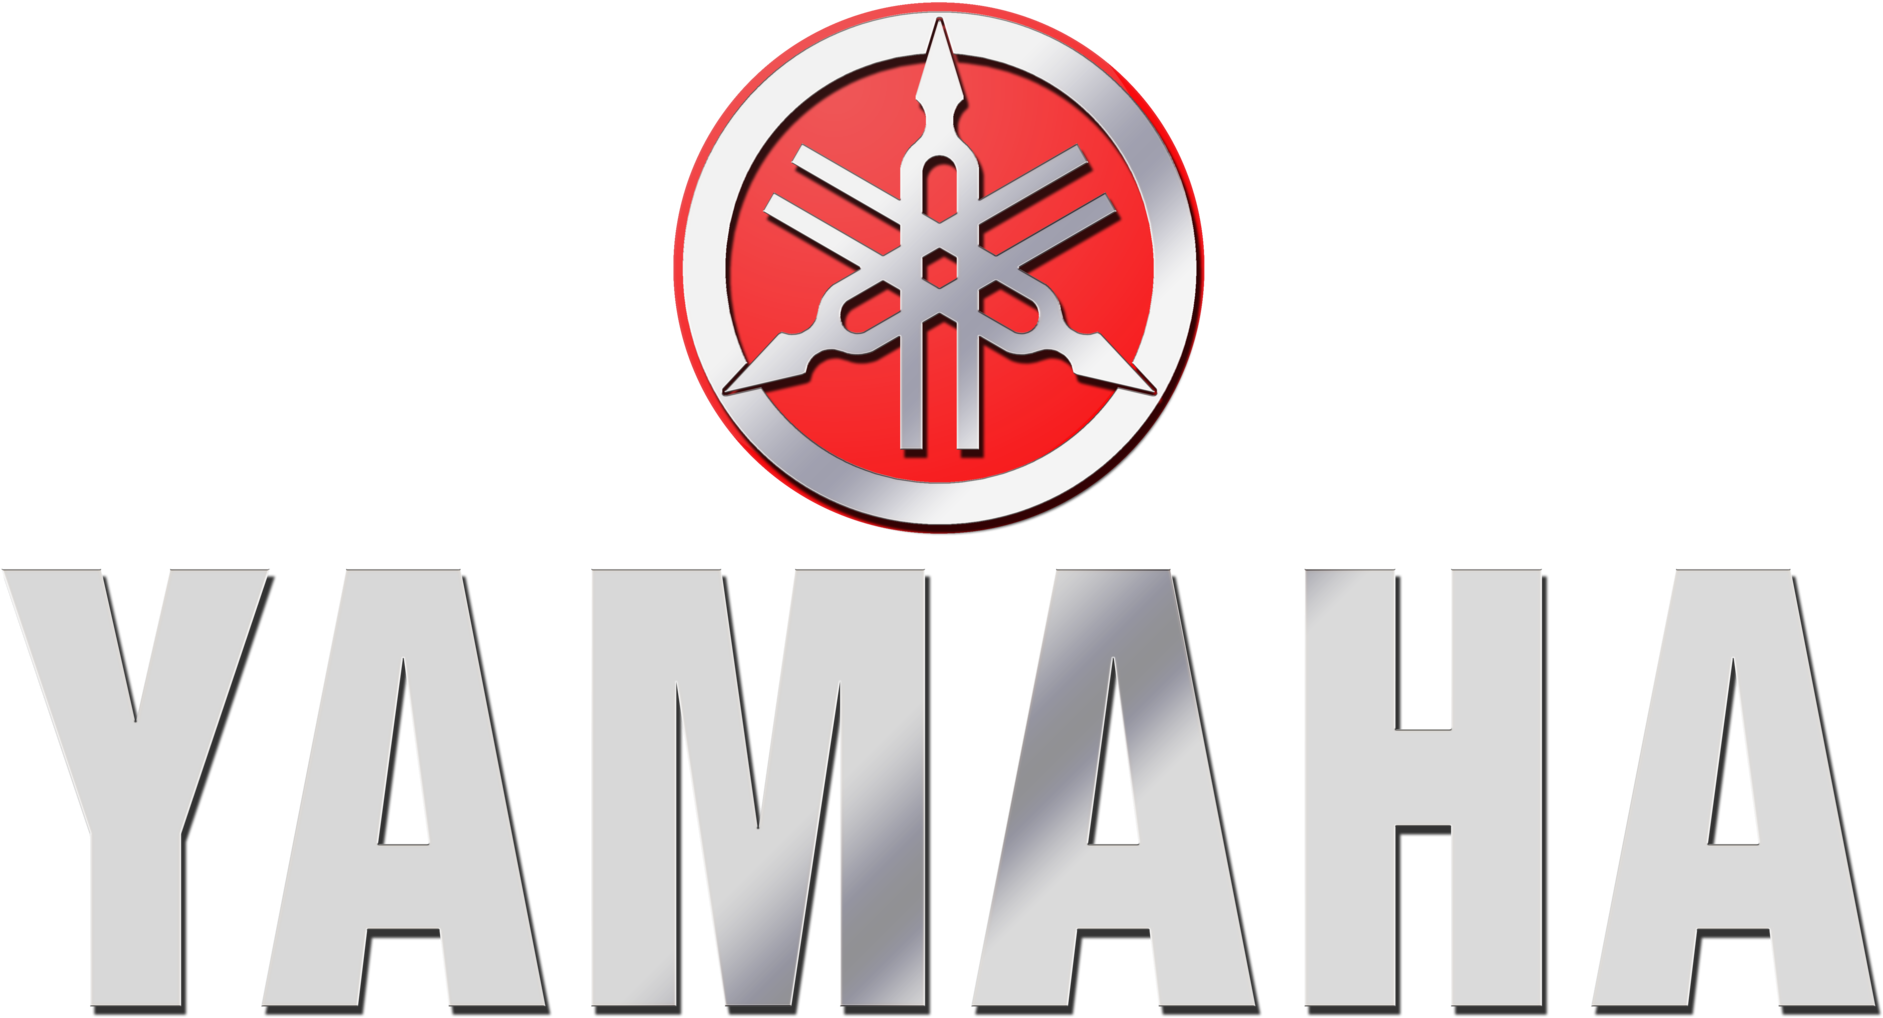 Yamaha Logo Redand White